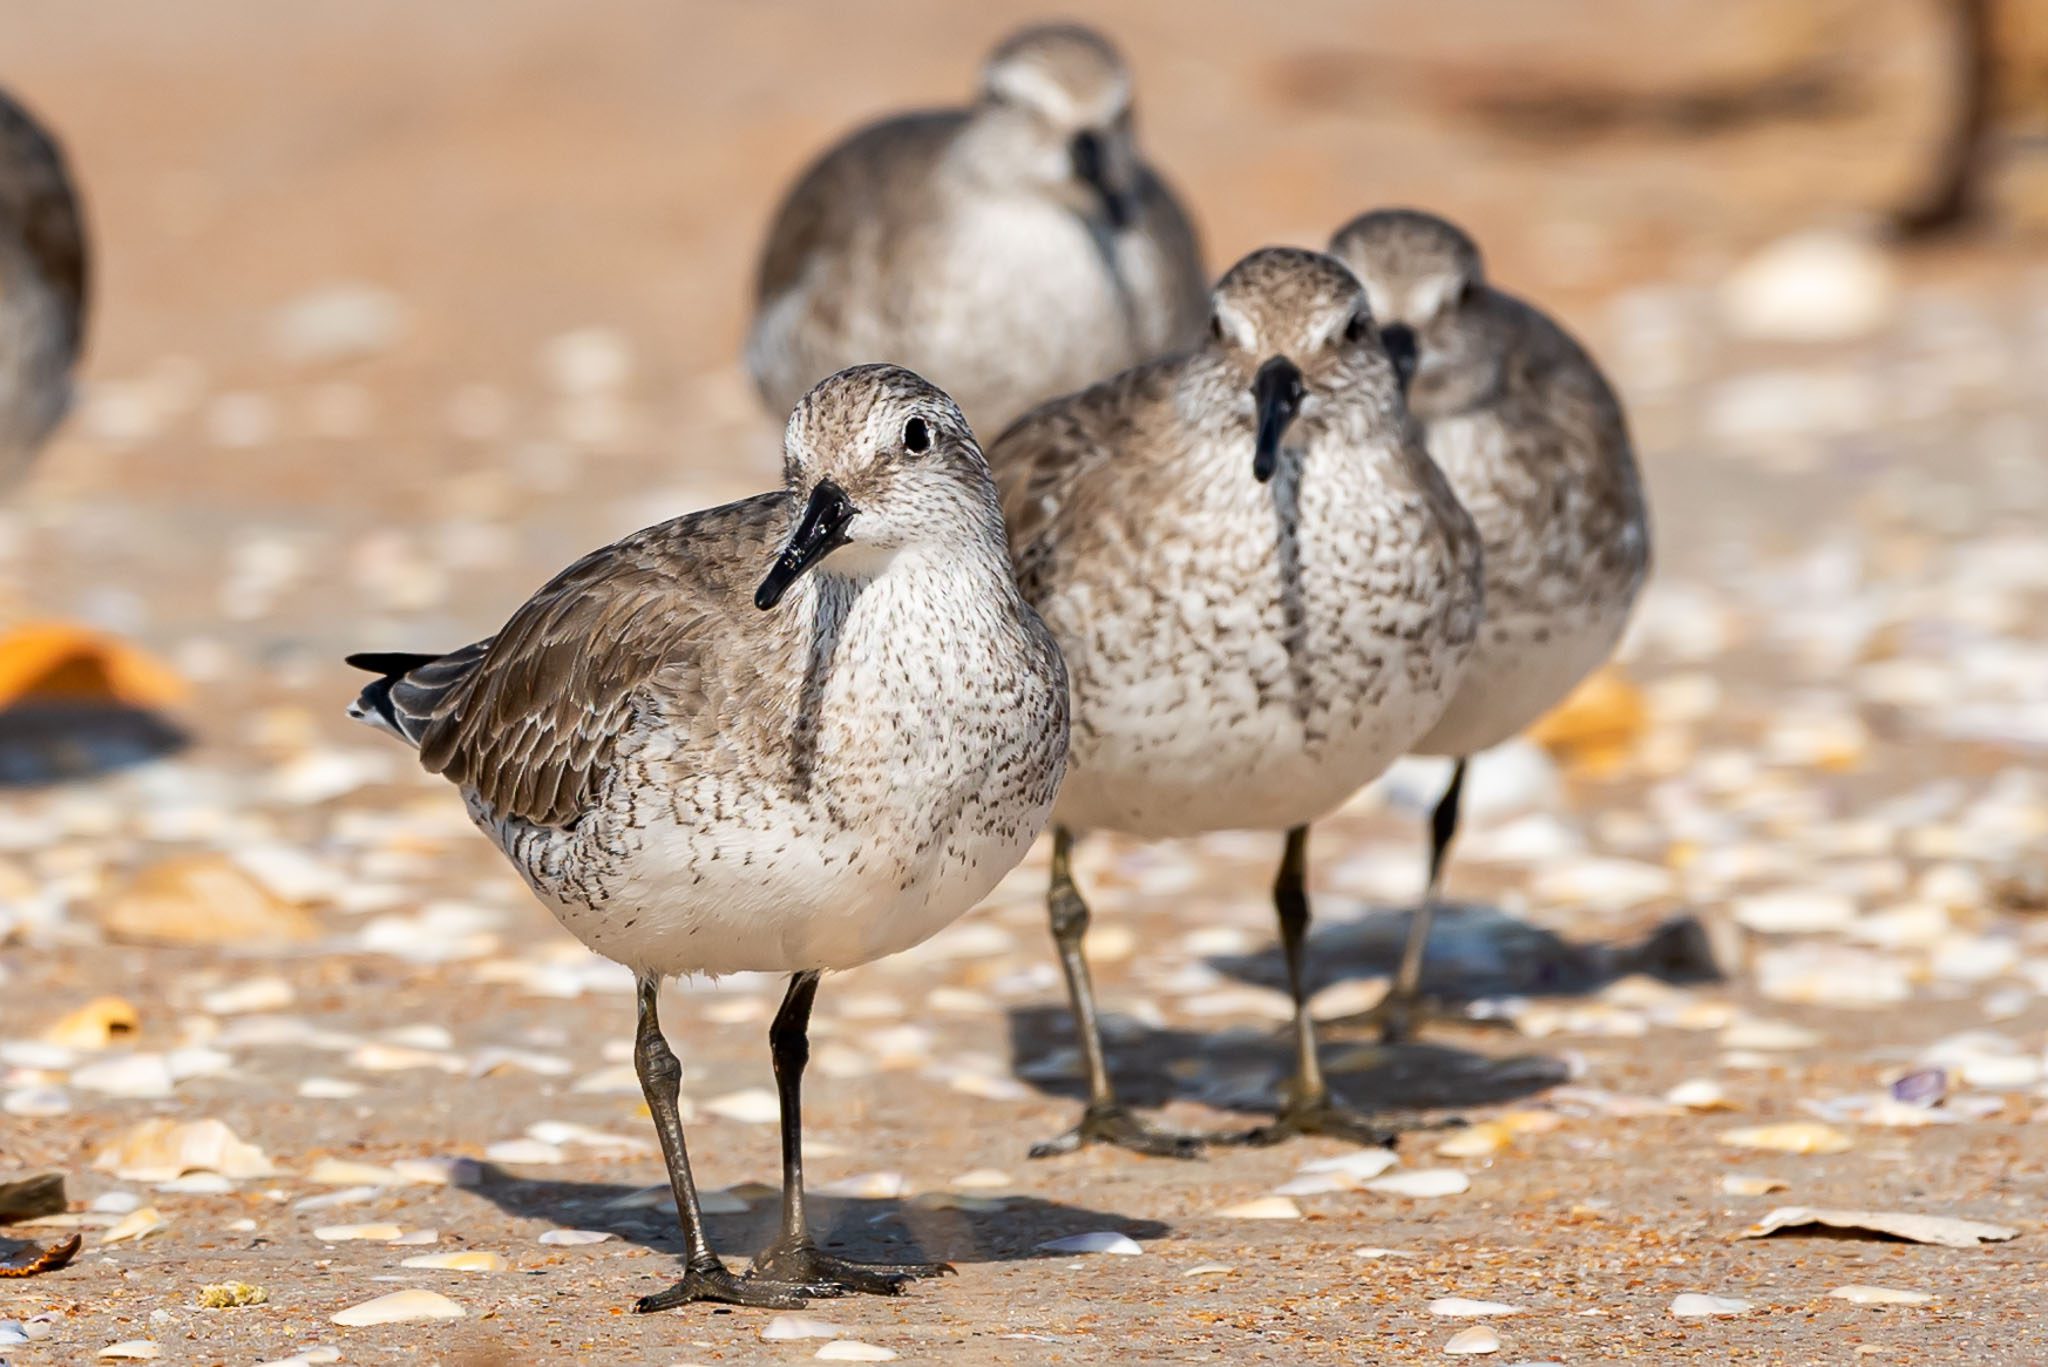 Shorebirds on the beach in Canaveral National Seashore